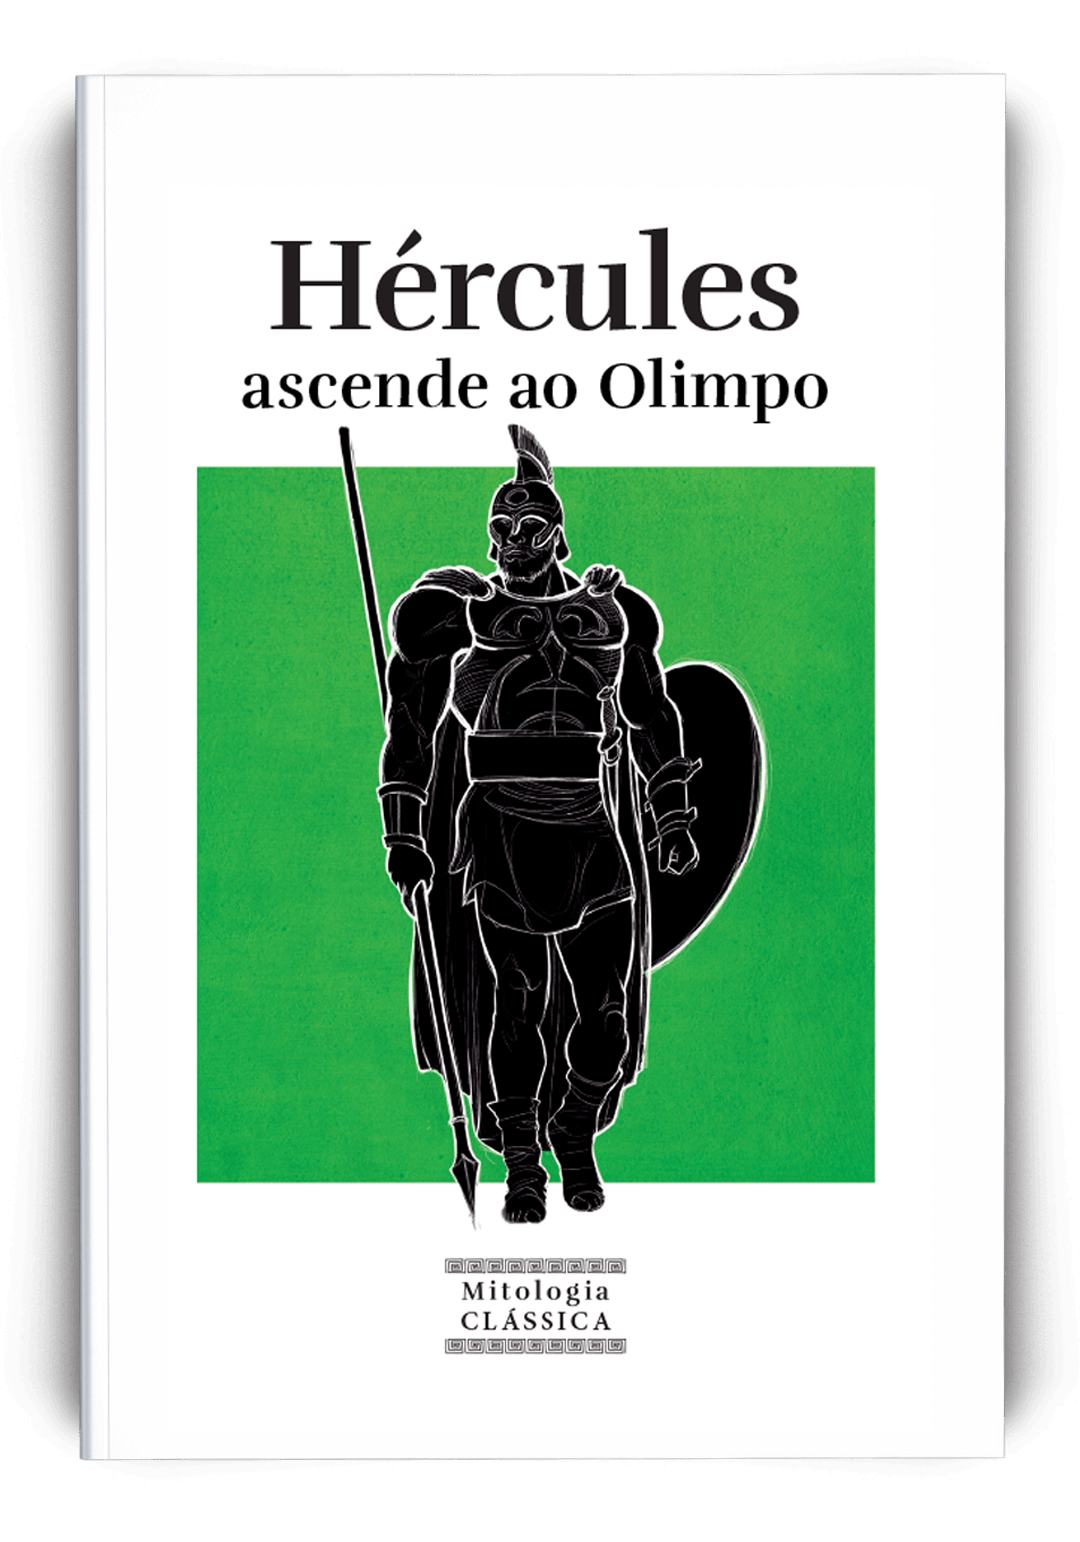 Hércules ascende ao Olimpo